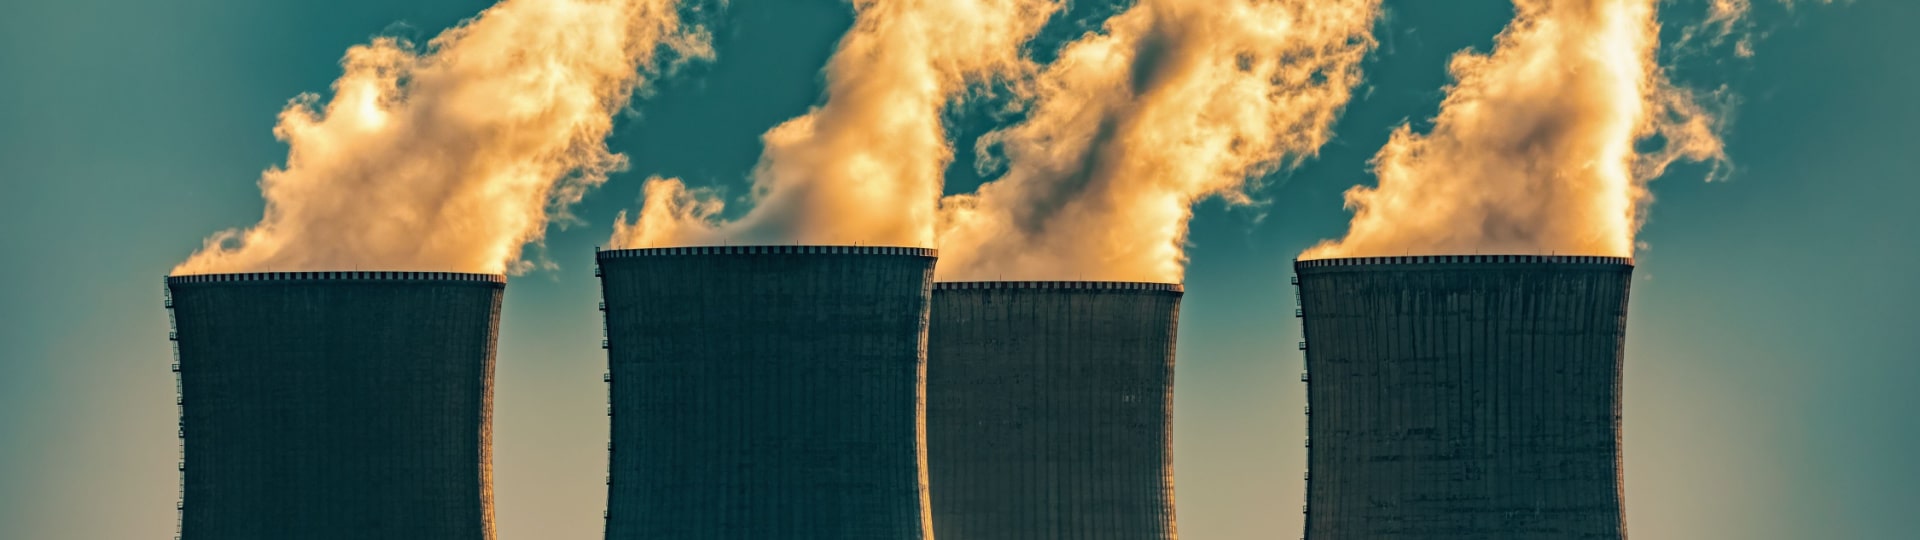 Jaderná elektrárna Dukovany chce zvýšit výkon a vyrobit víc elektřiny